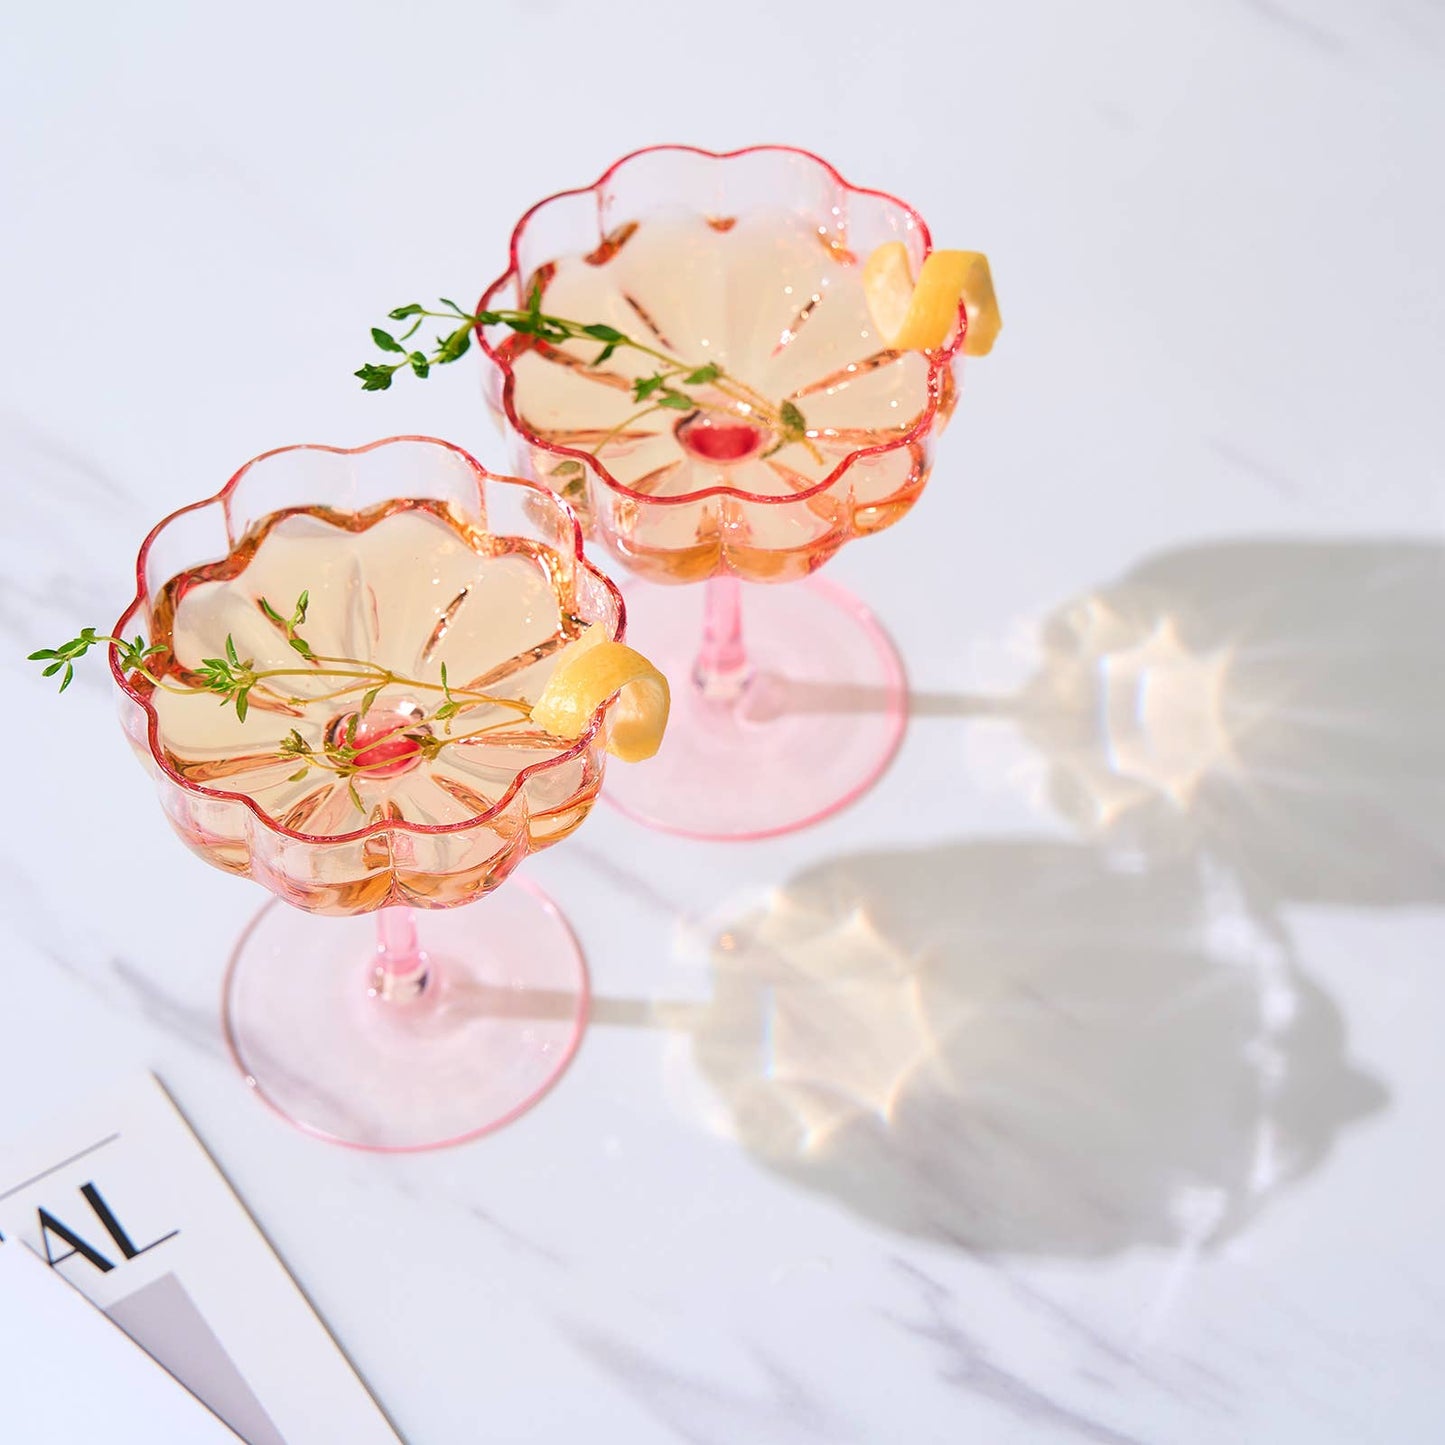 Flower Wavy Petals Wave Glass Coupes 7oz - Set of 2 (Pink)